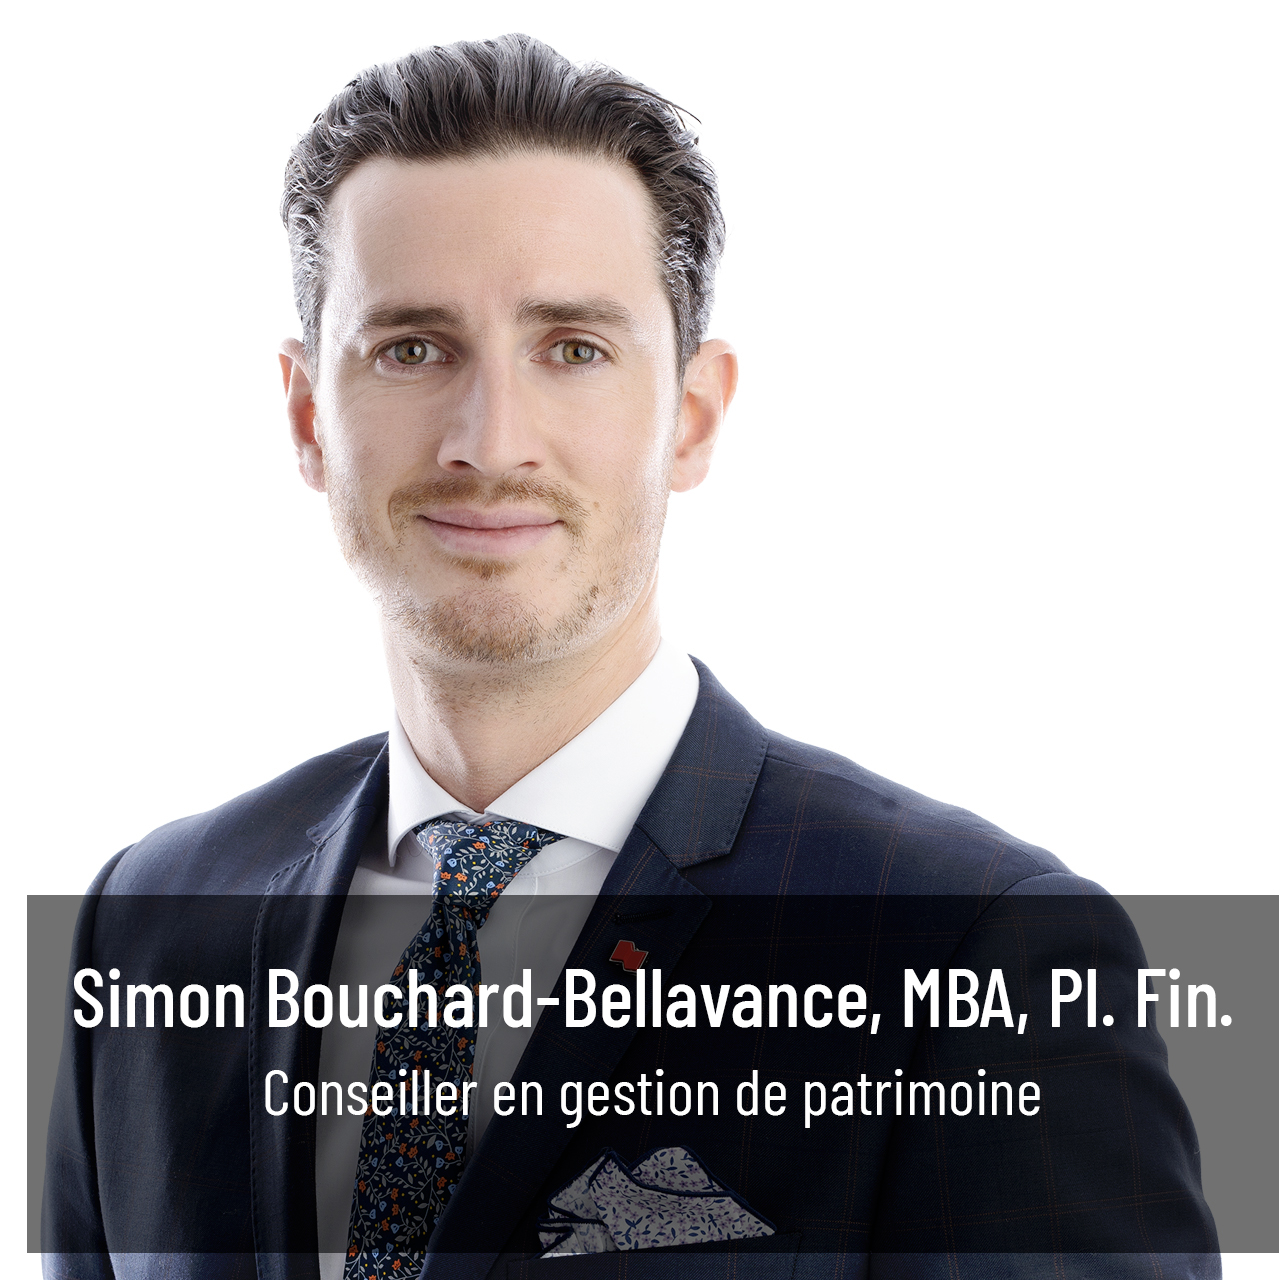 Simon Bouchard-Bellavance